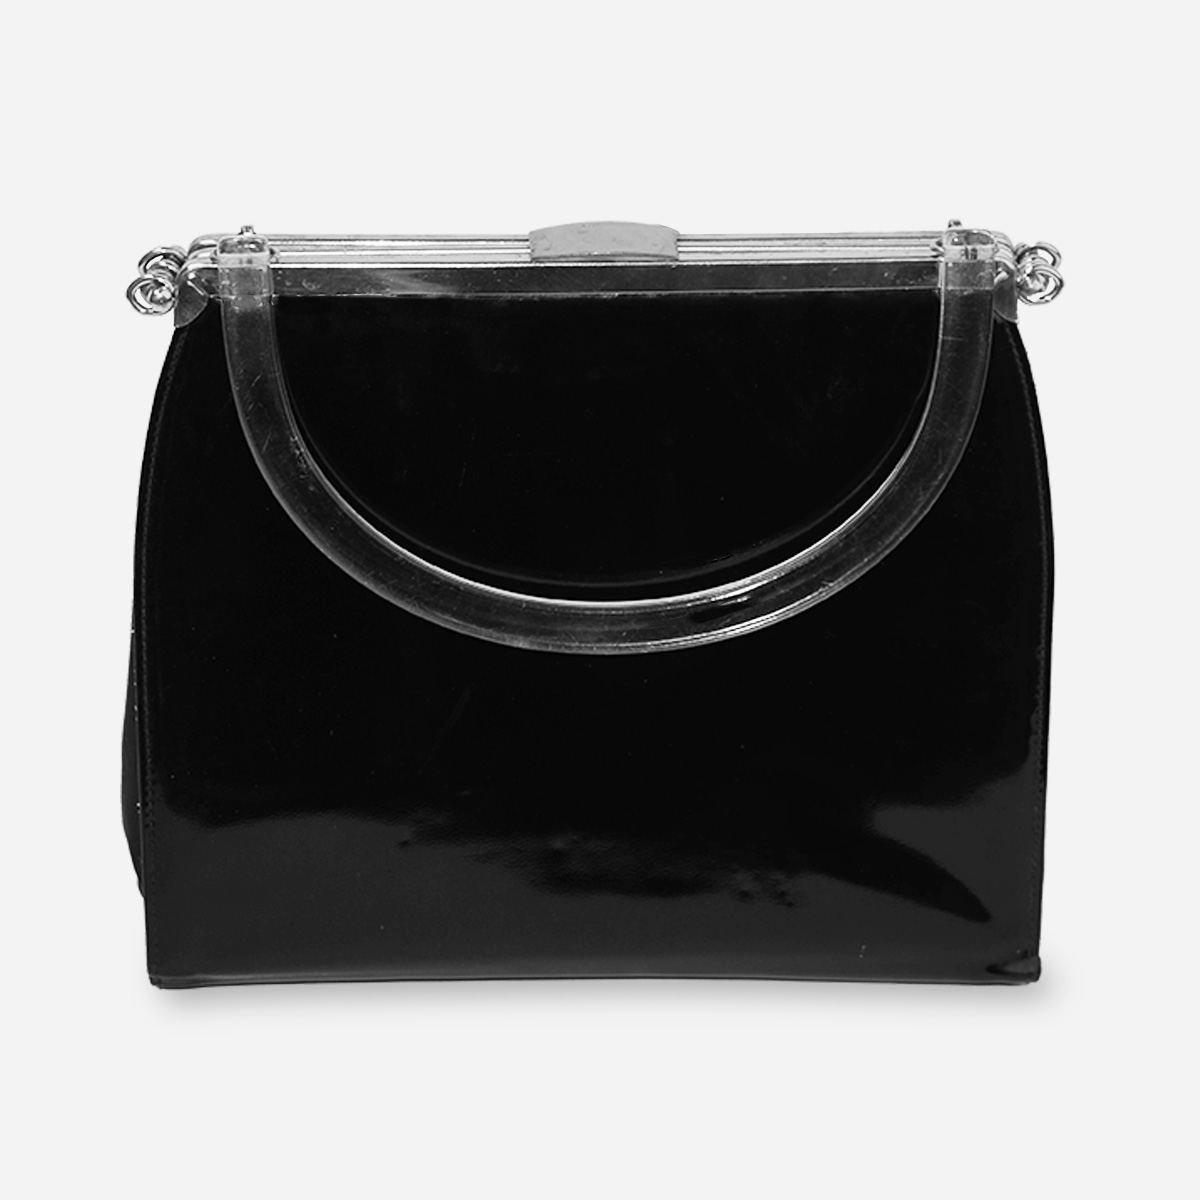 Black patent leather bag